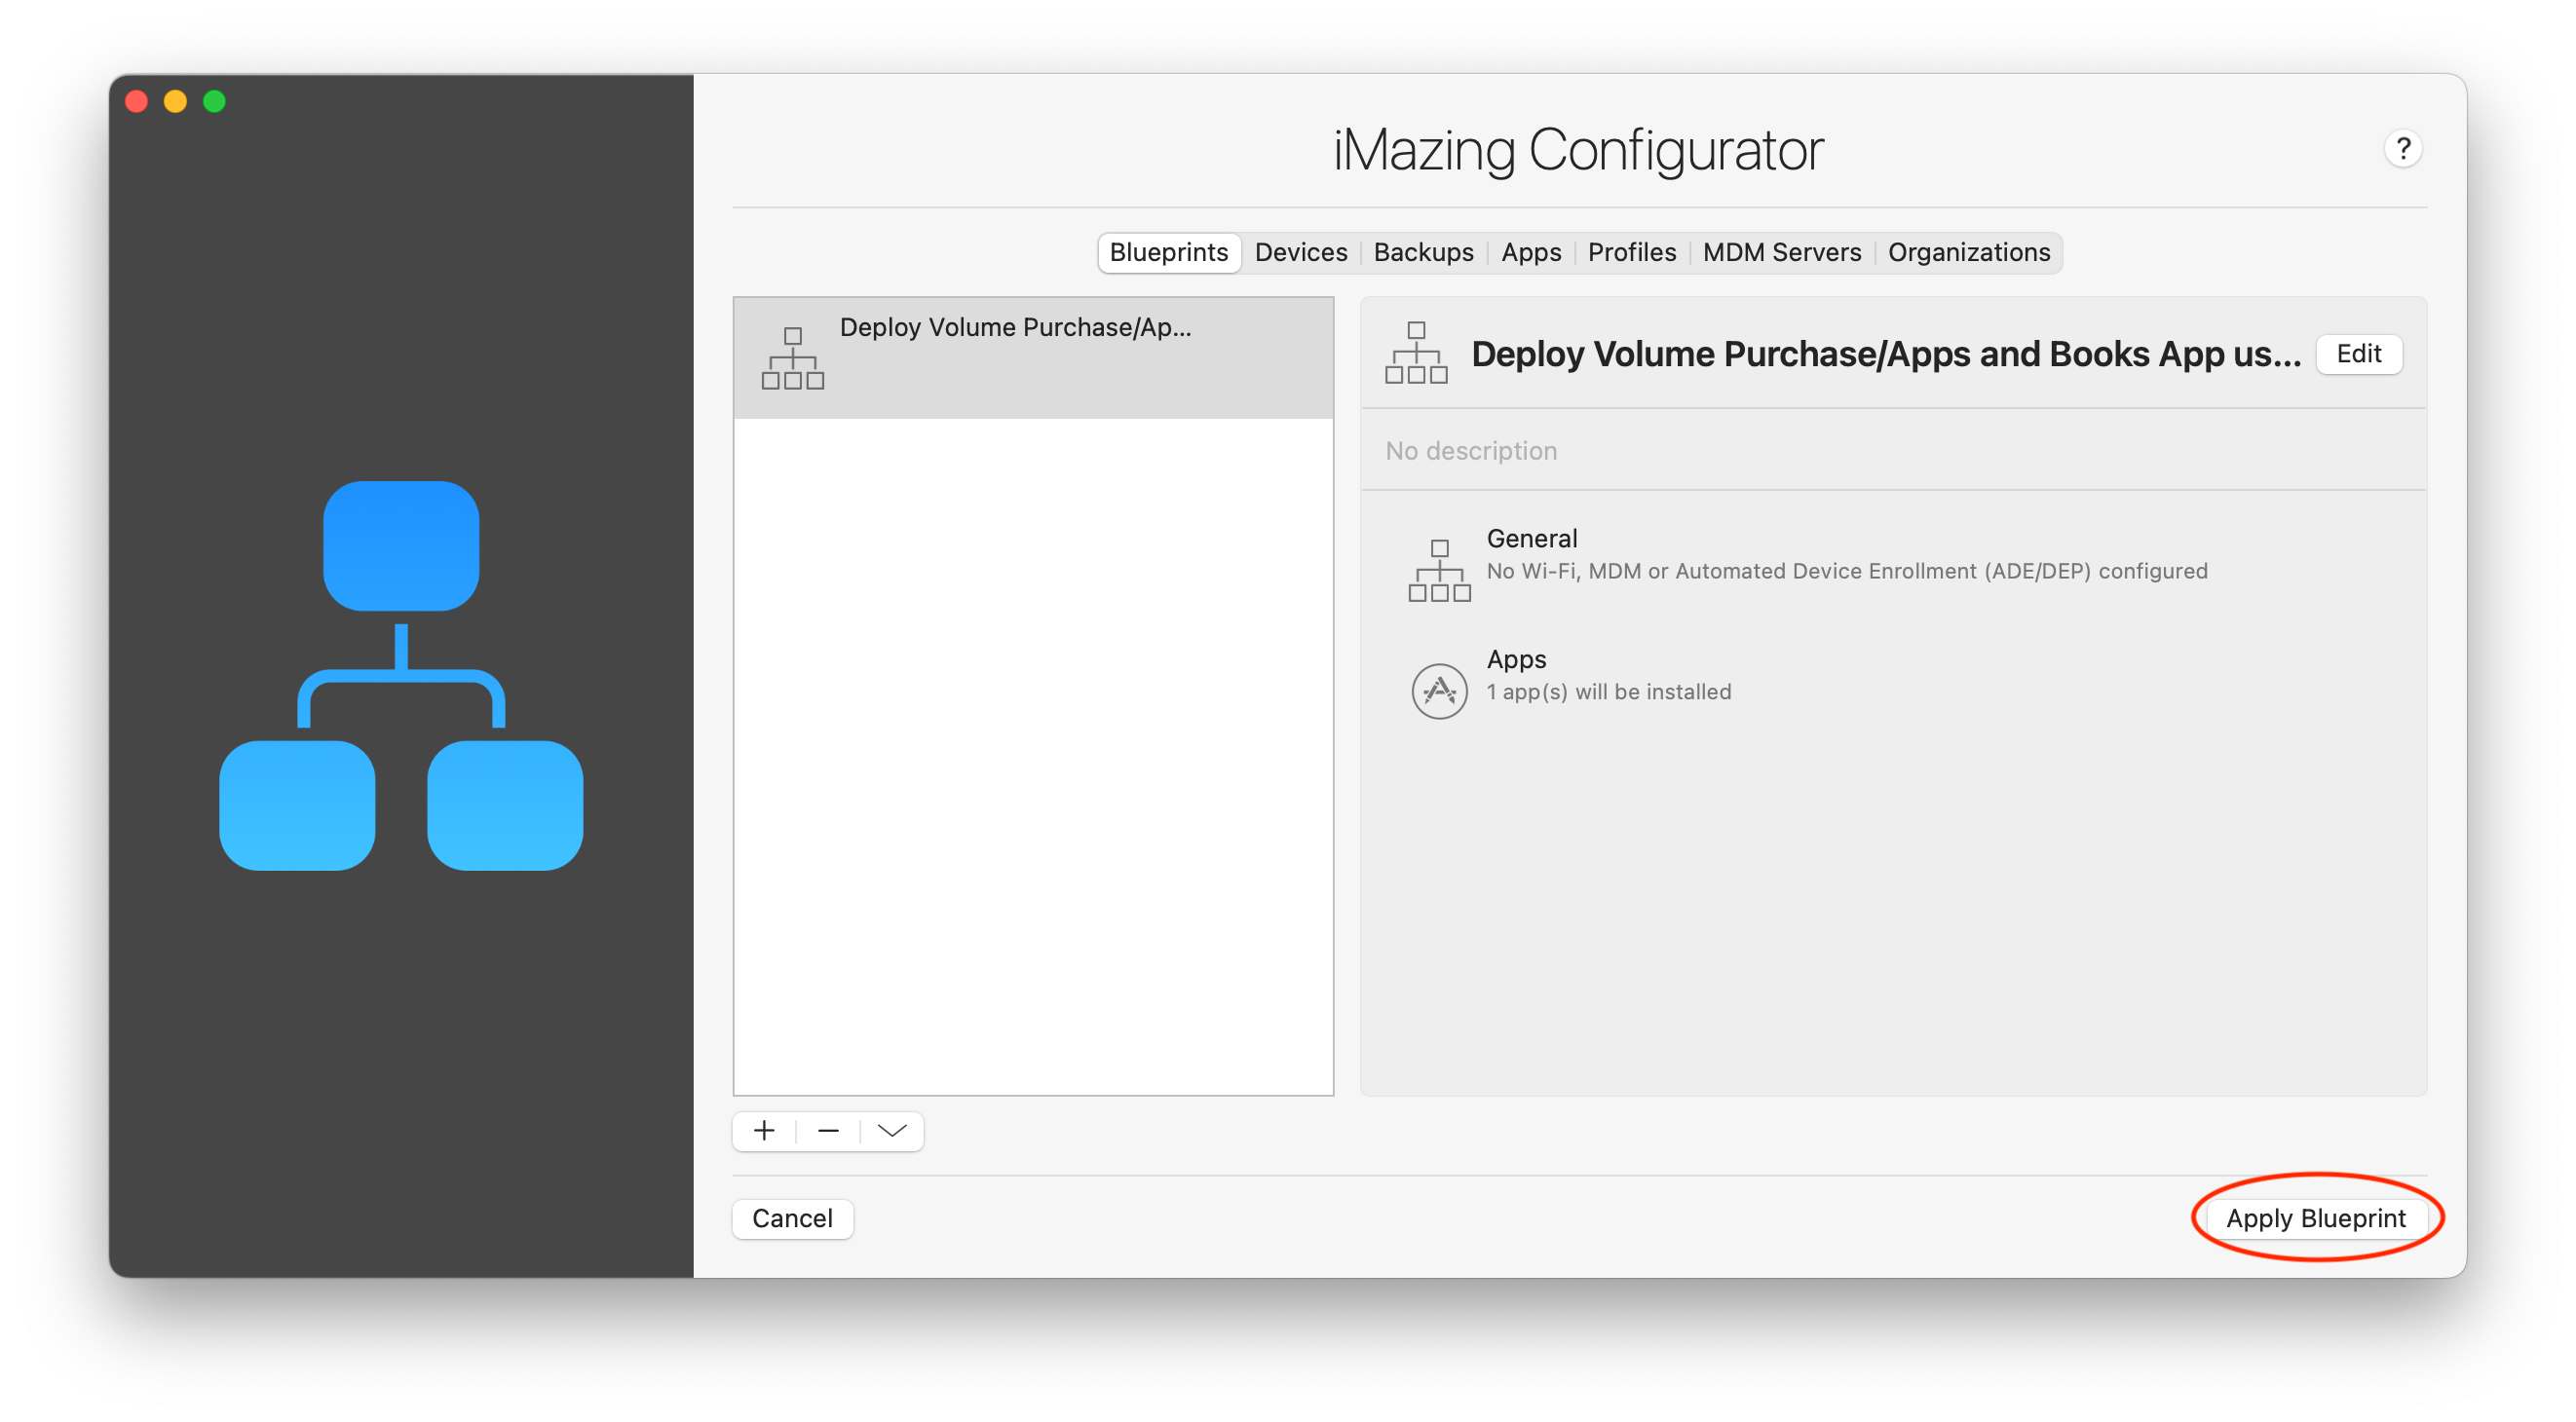 iMazing Configurator Apply Blueprint